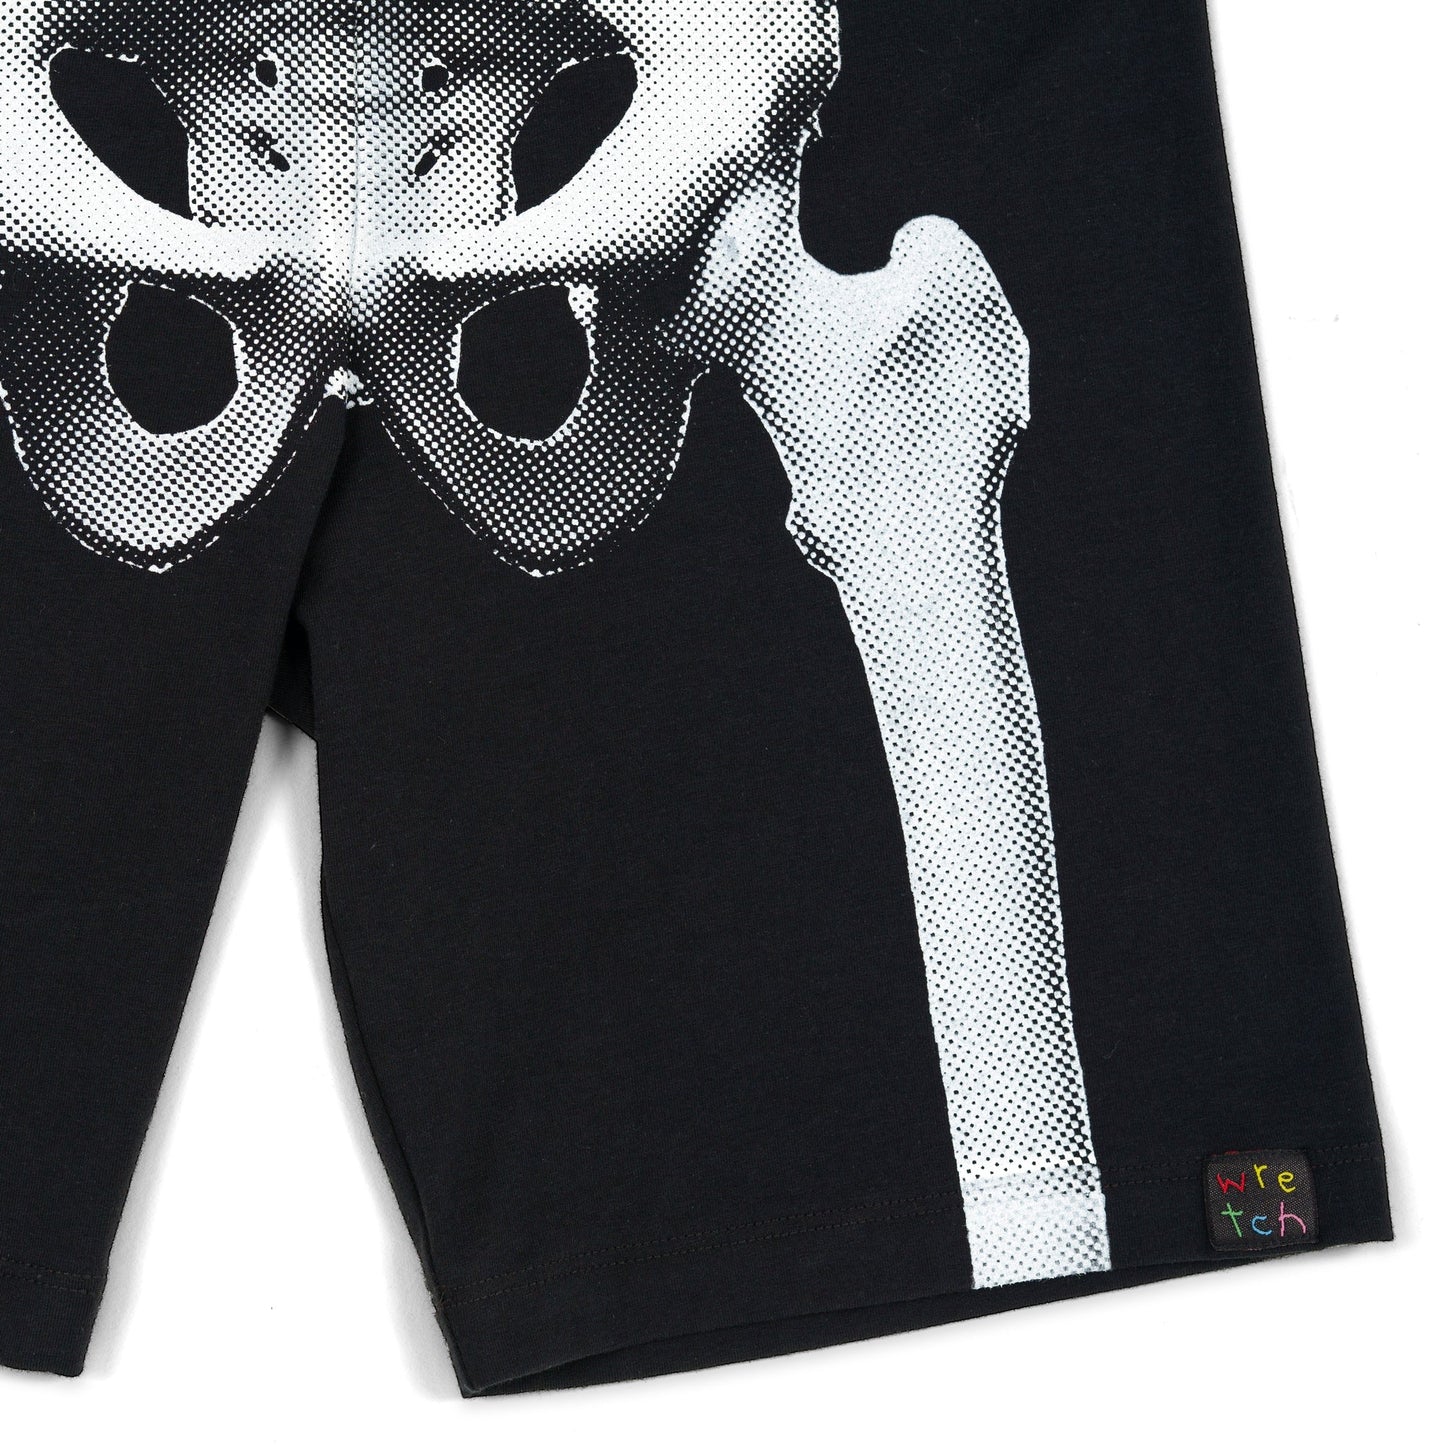 SkeleSpandex Shorts